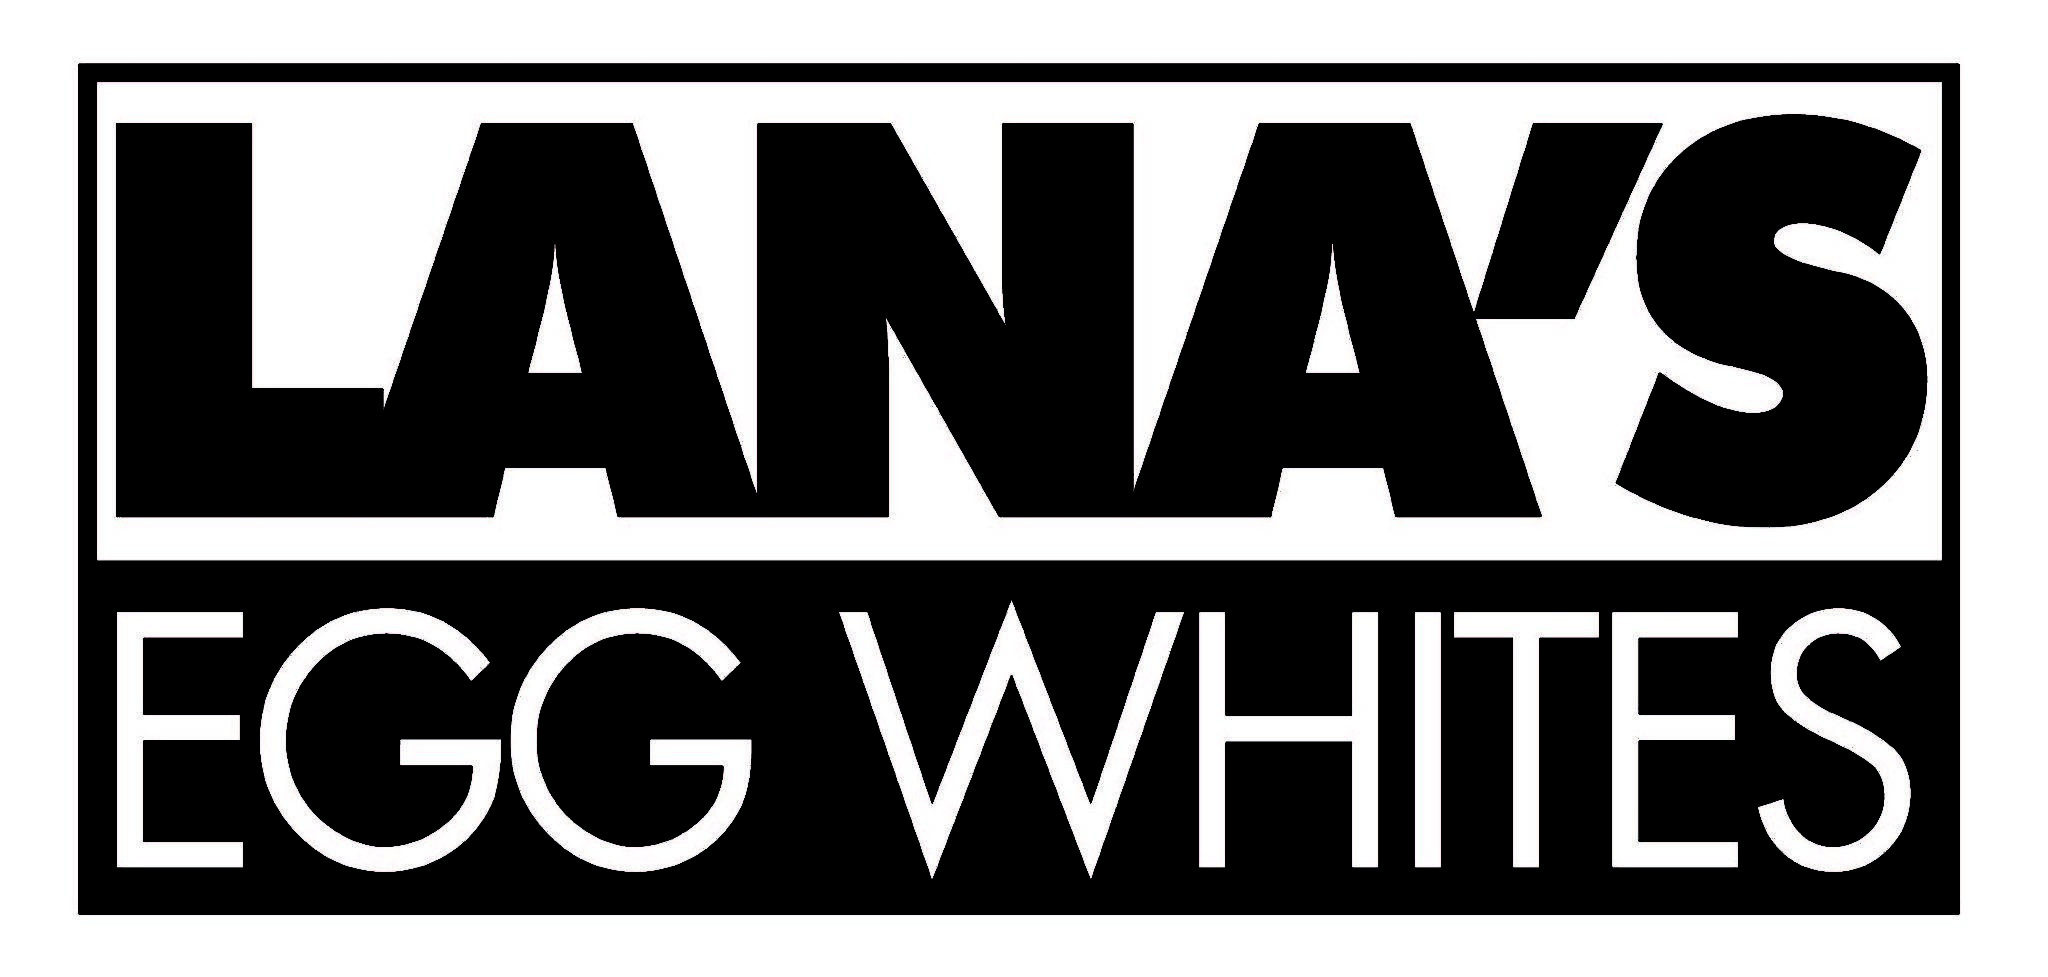 White's Logo - LANA EGG WHITES - LOGO-7-1-12 - Evolution Sports Expo